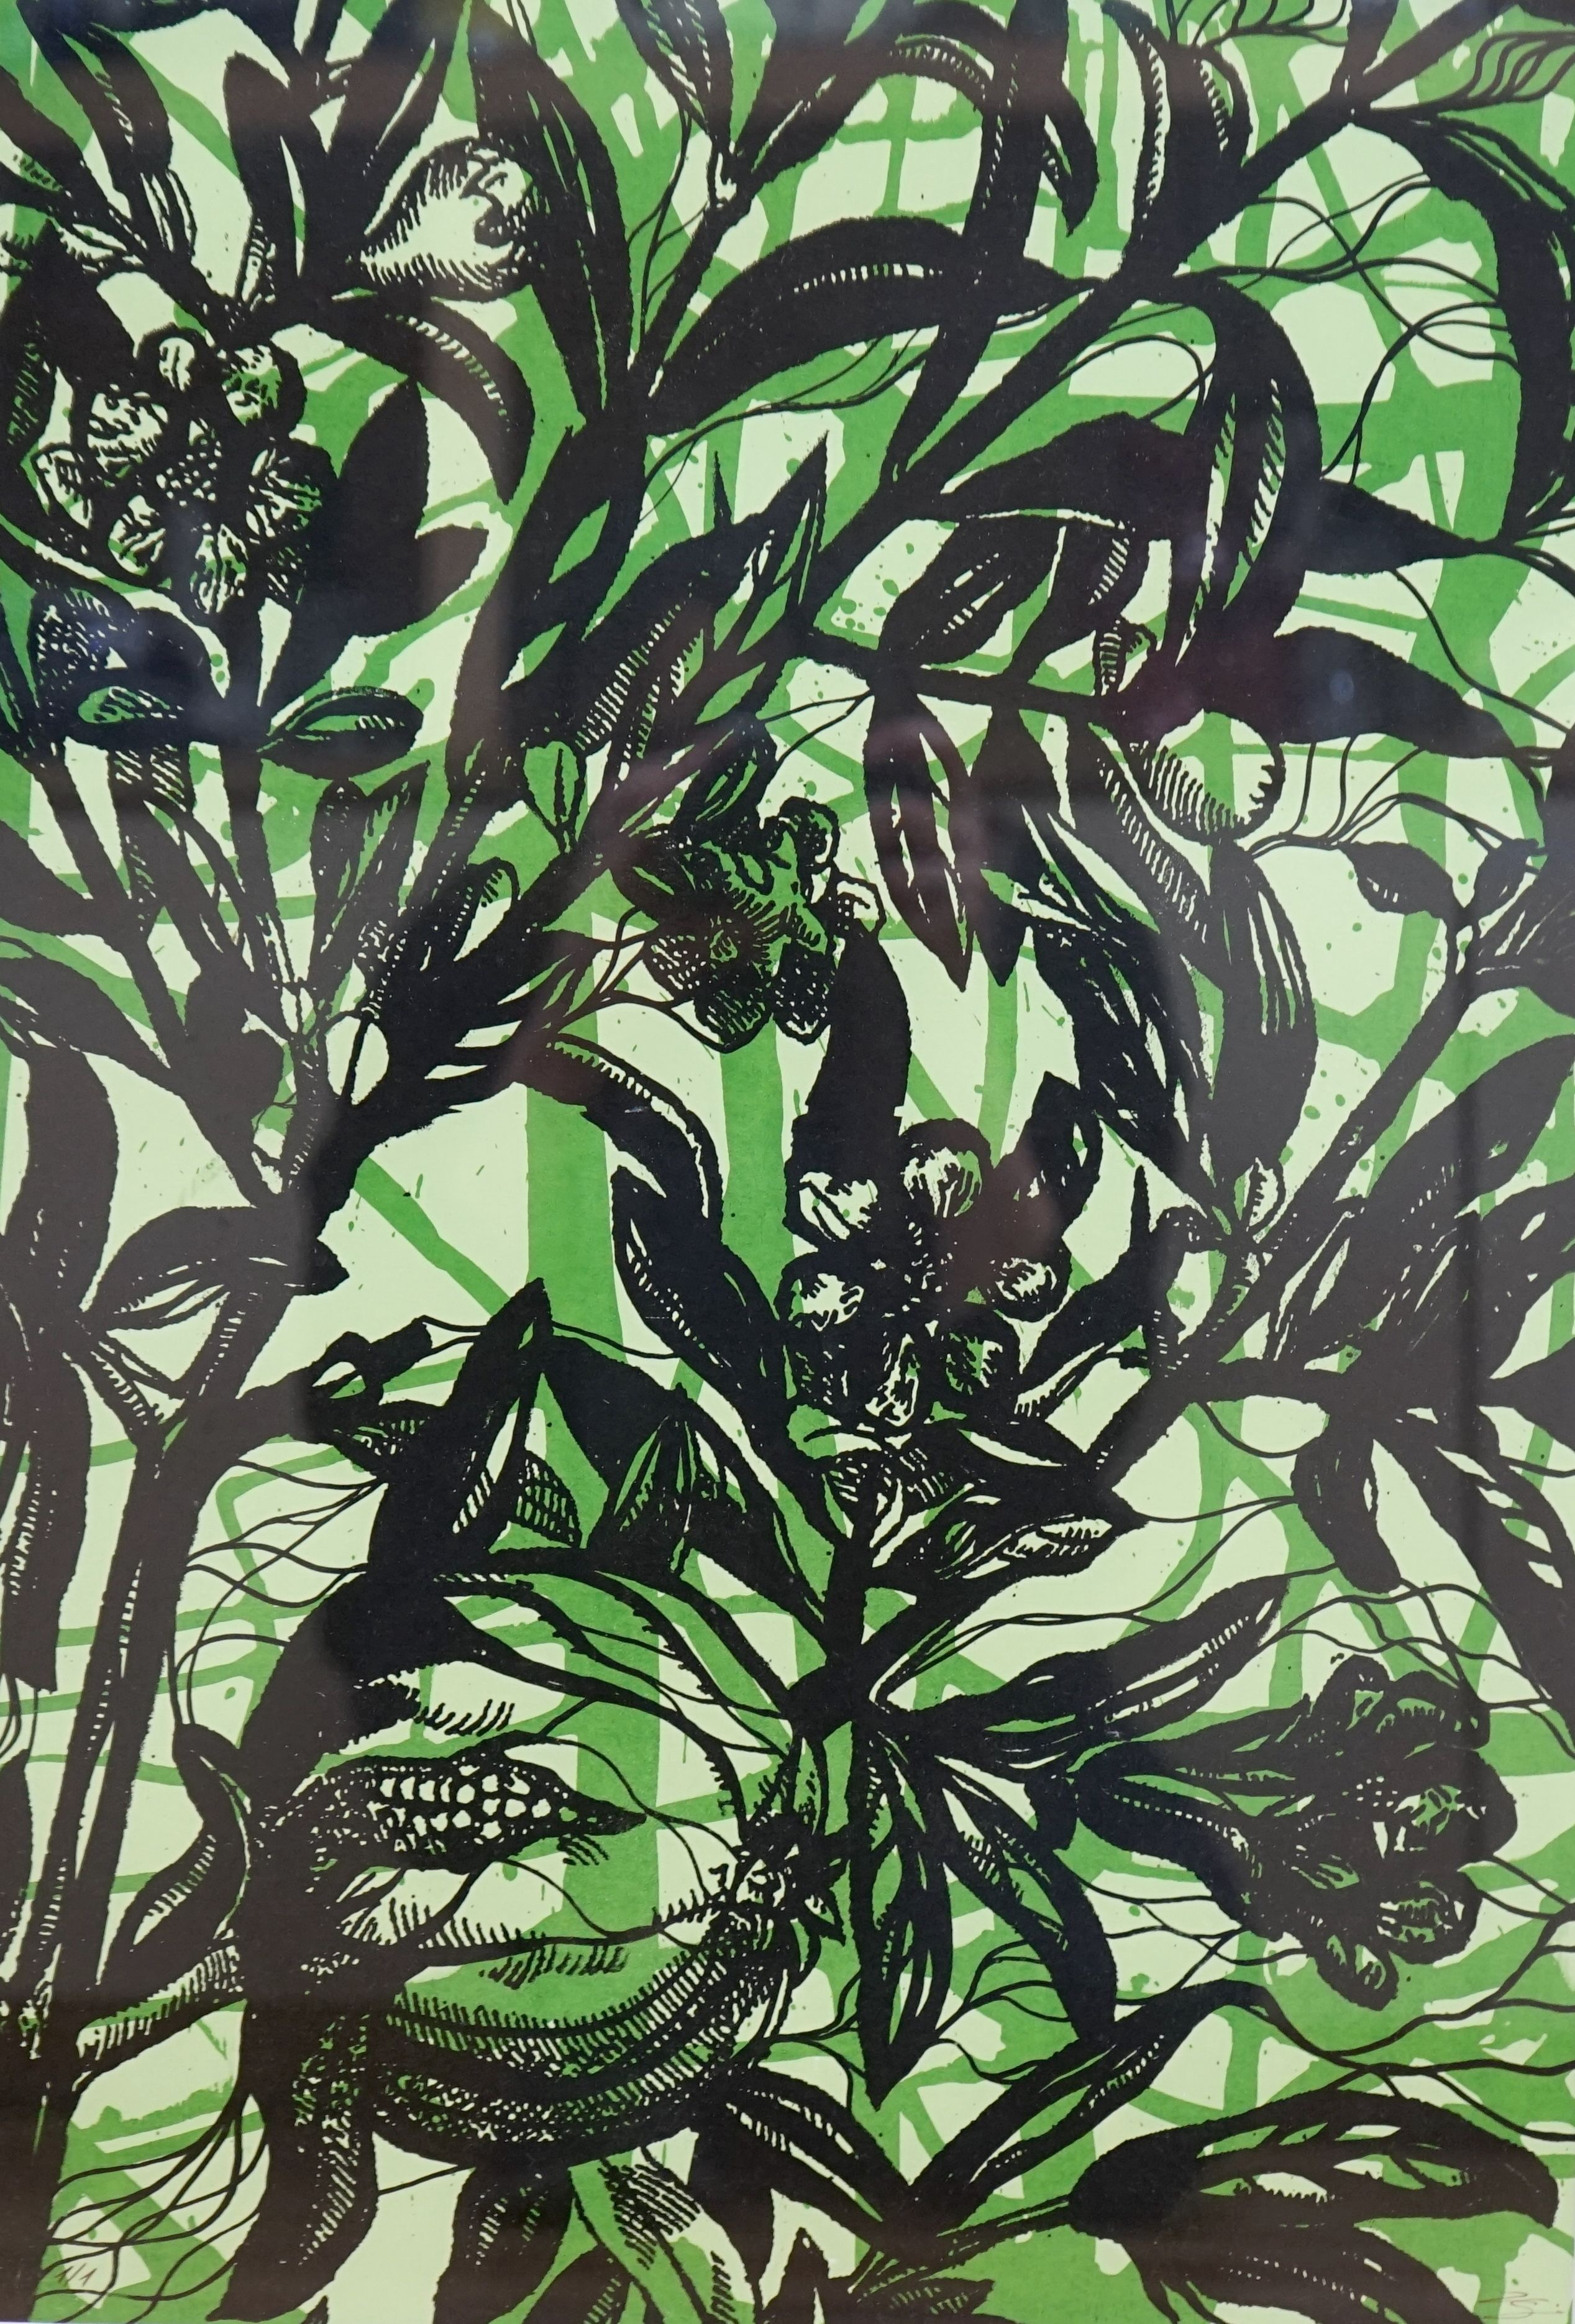 Zsi Chimera (1978-), lino-print, Flower study, initialled, 54 x 38cm